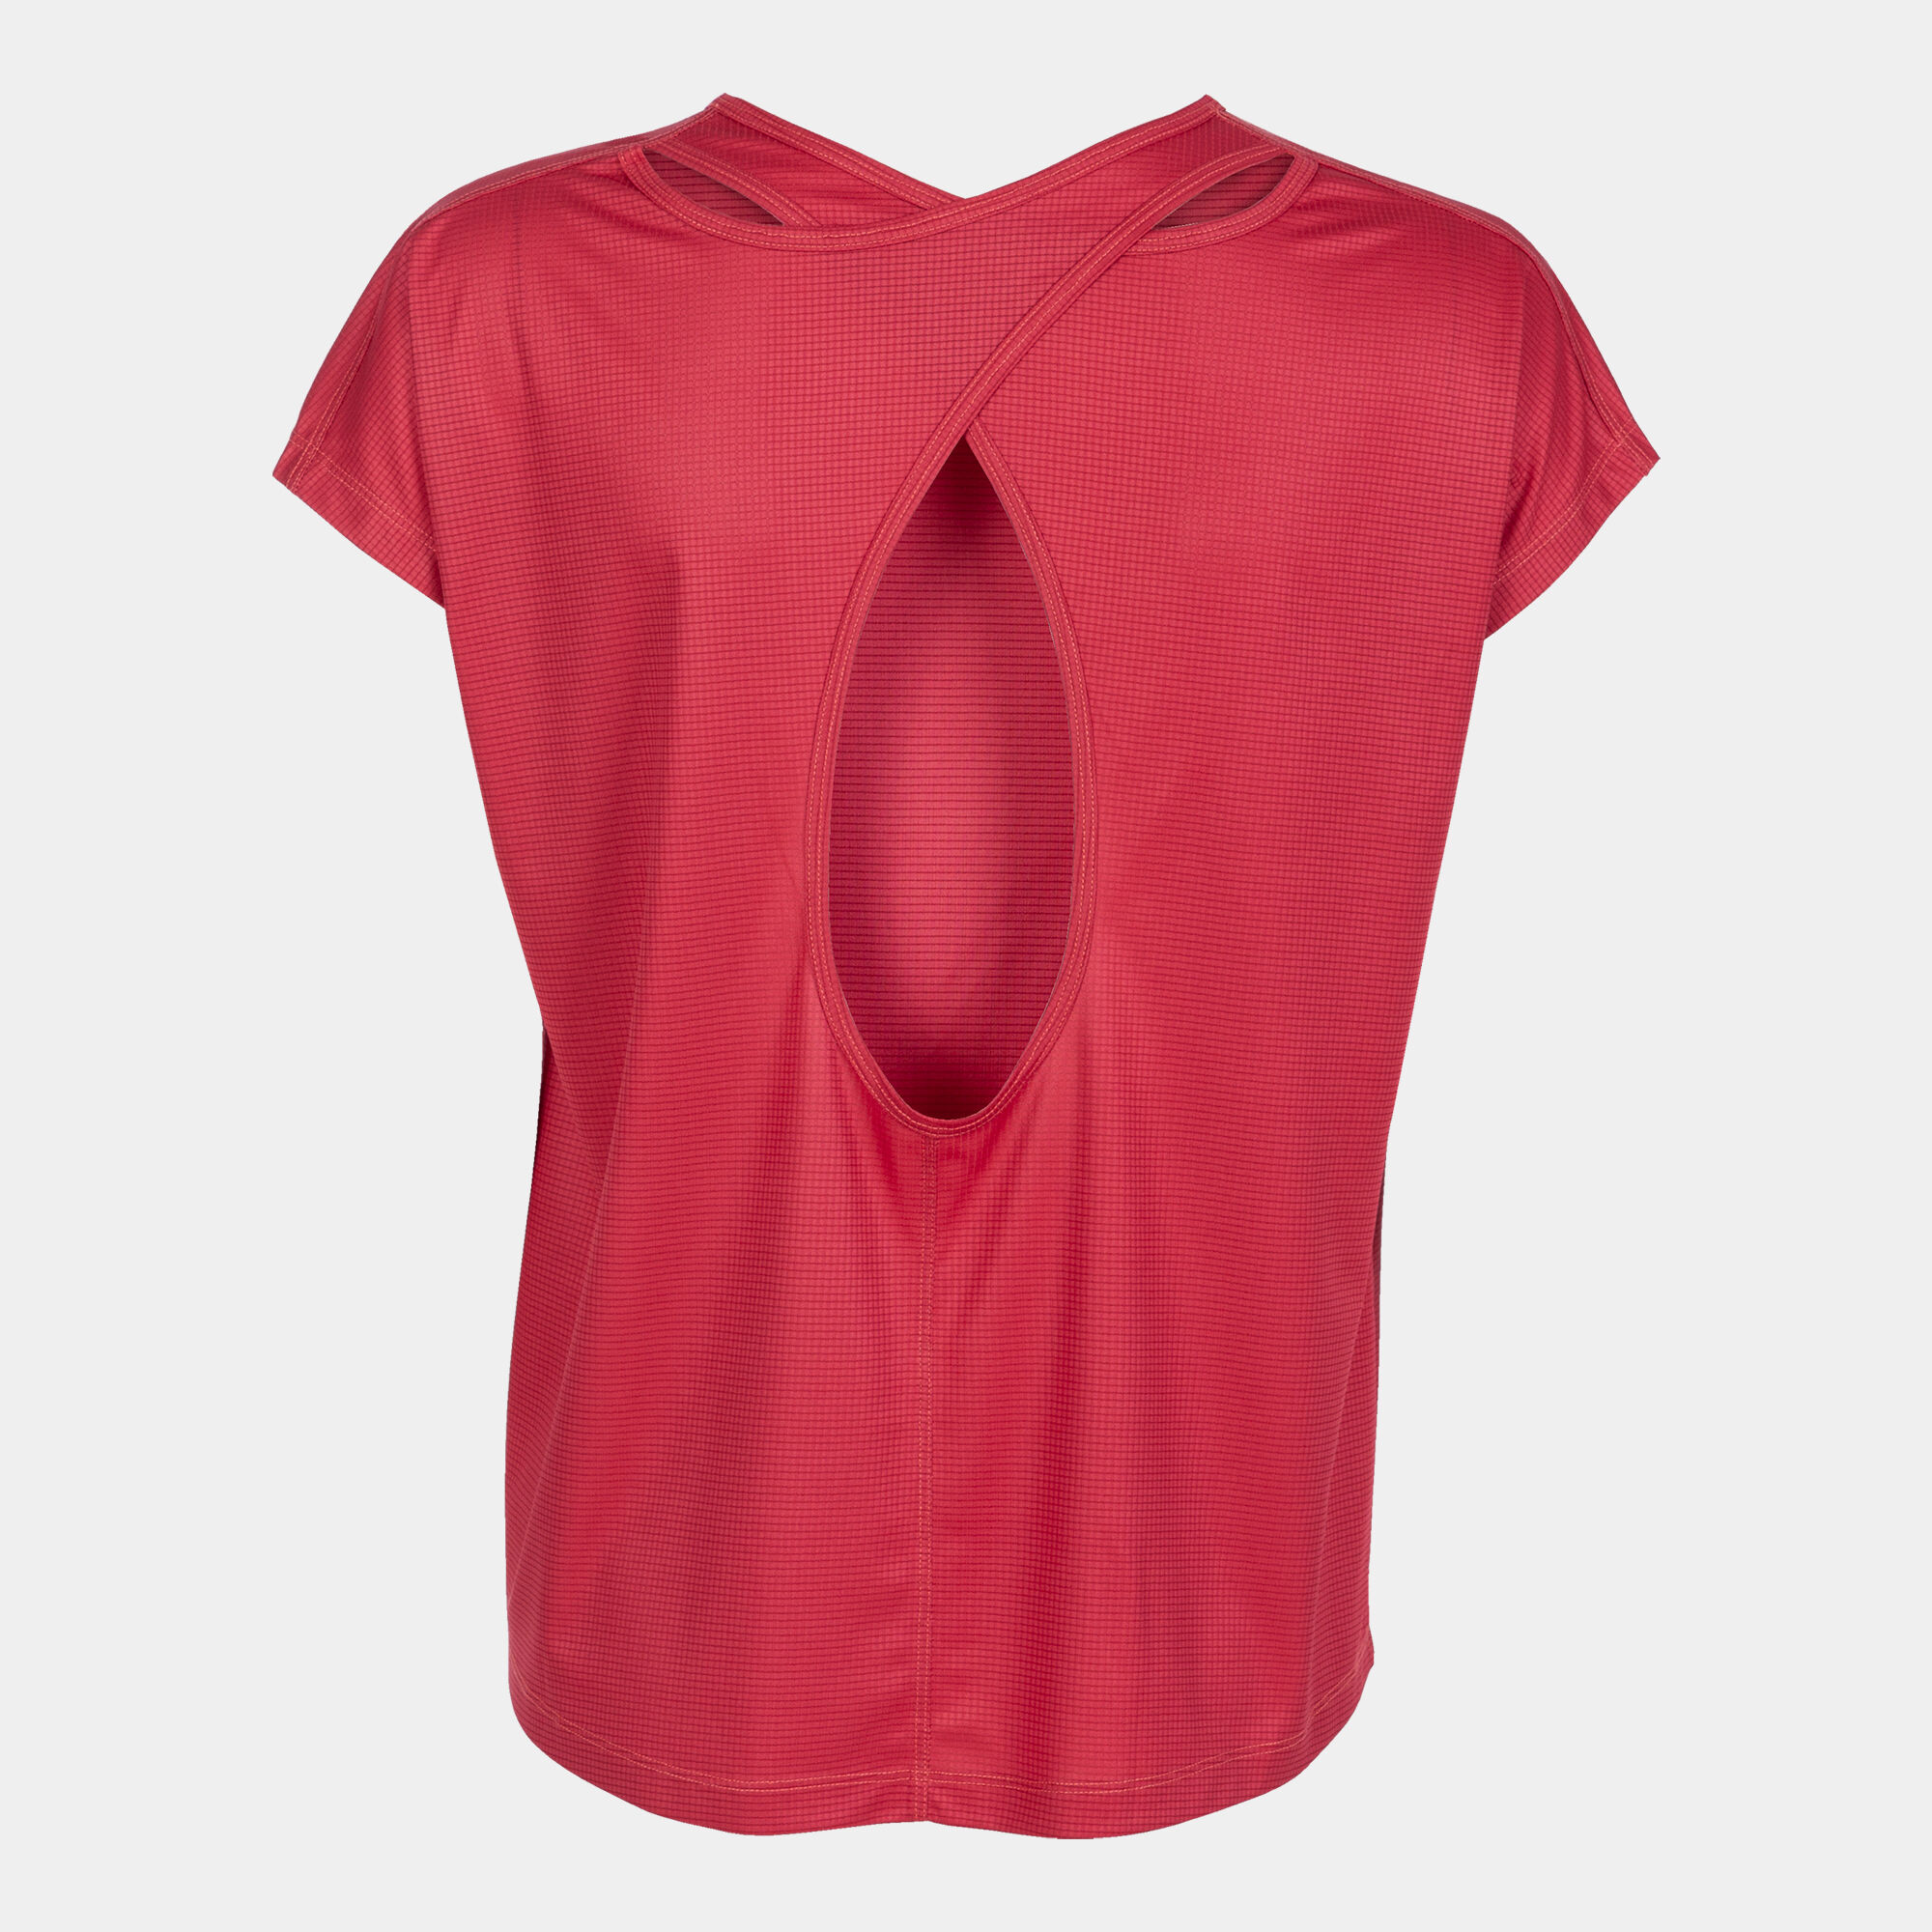 Camiseta manga corta mujer Core rojo